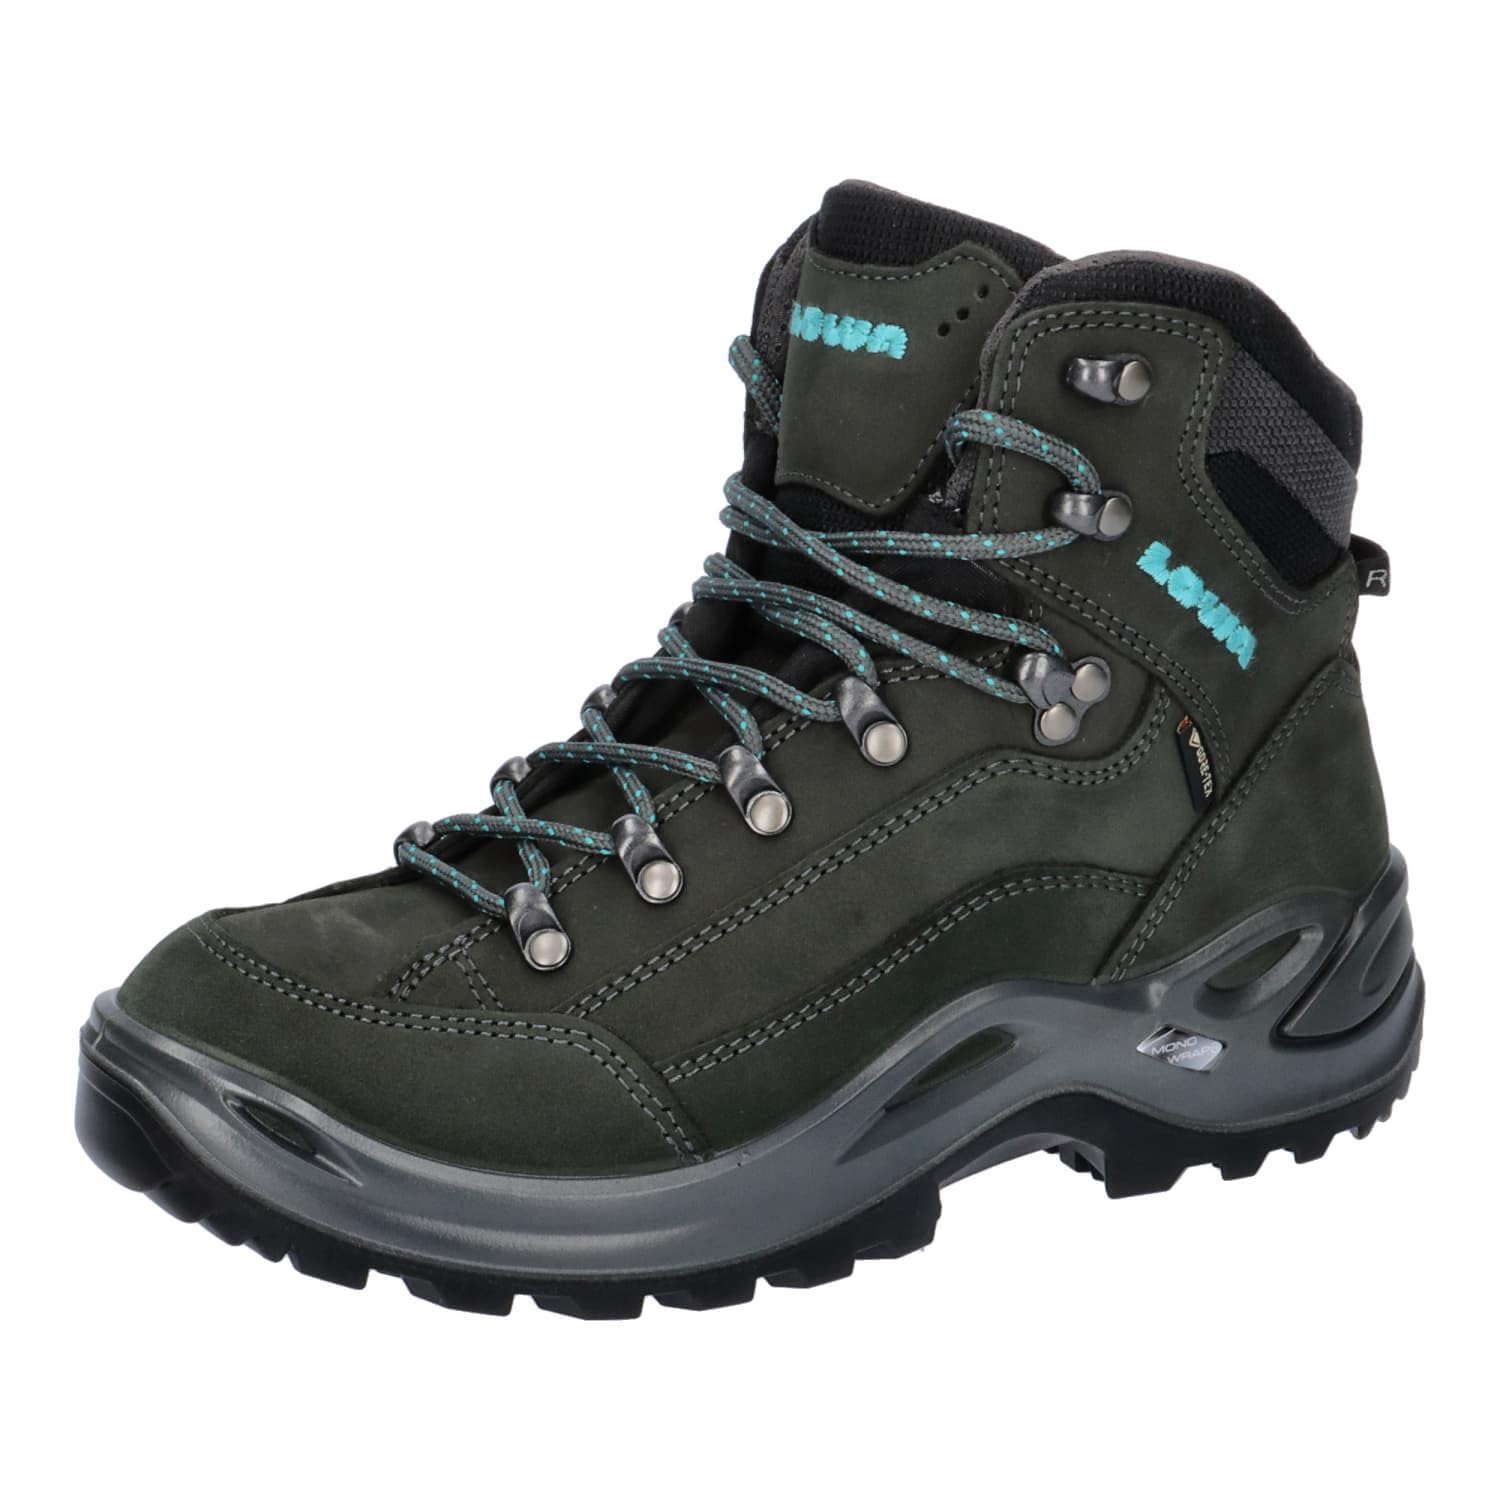 Lowa Renegade GTX MID Ws Damen Wanderstiefel Trekkingschuh Outdoor Goretex 320945, Schuhgröße:41 EU